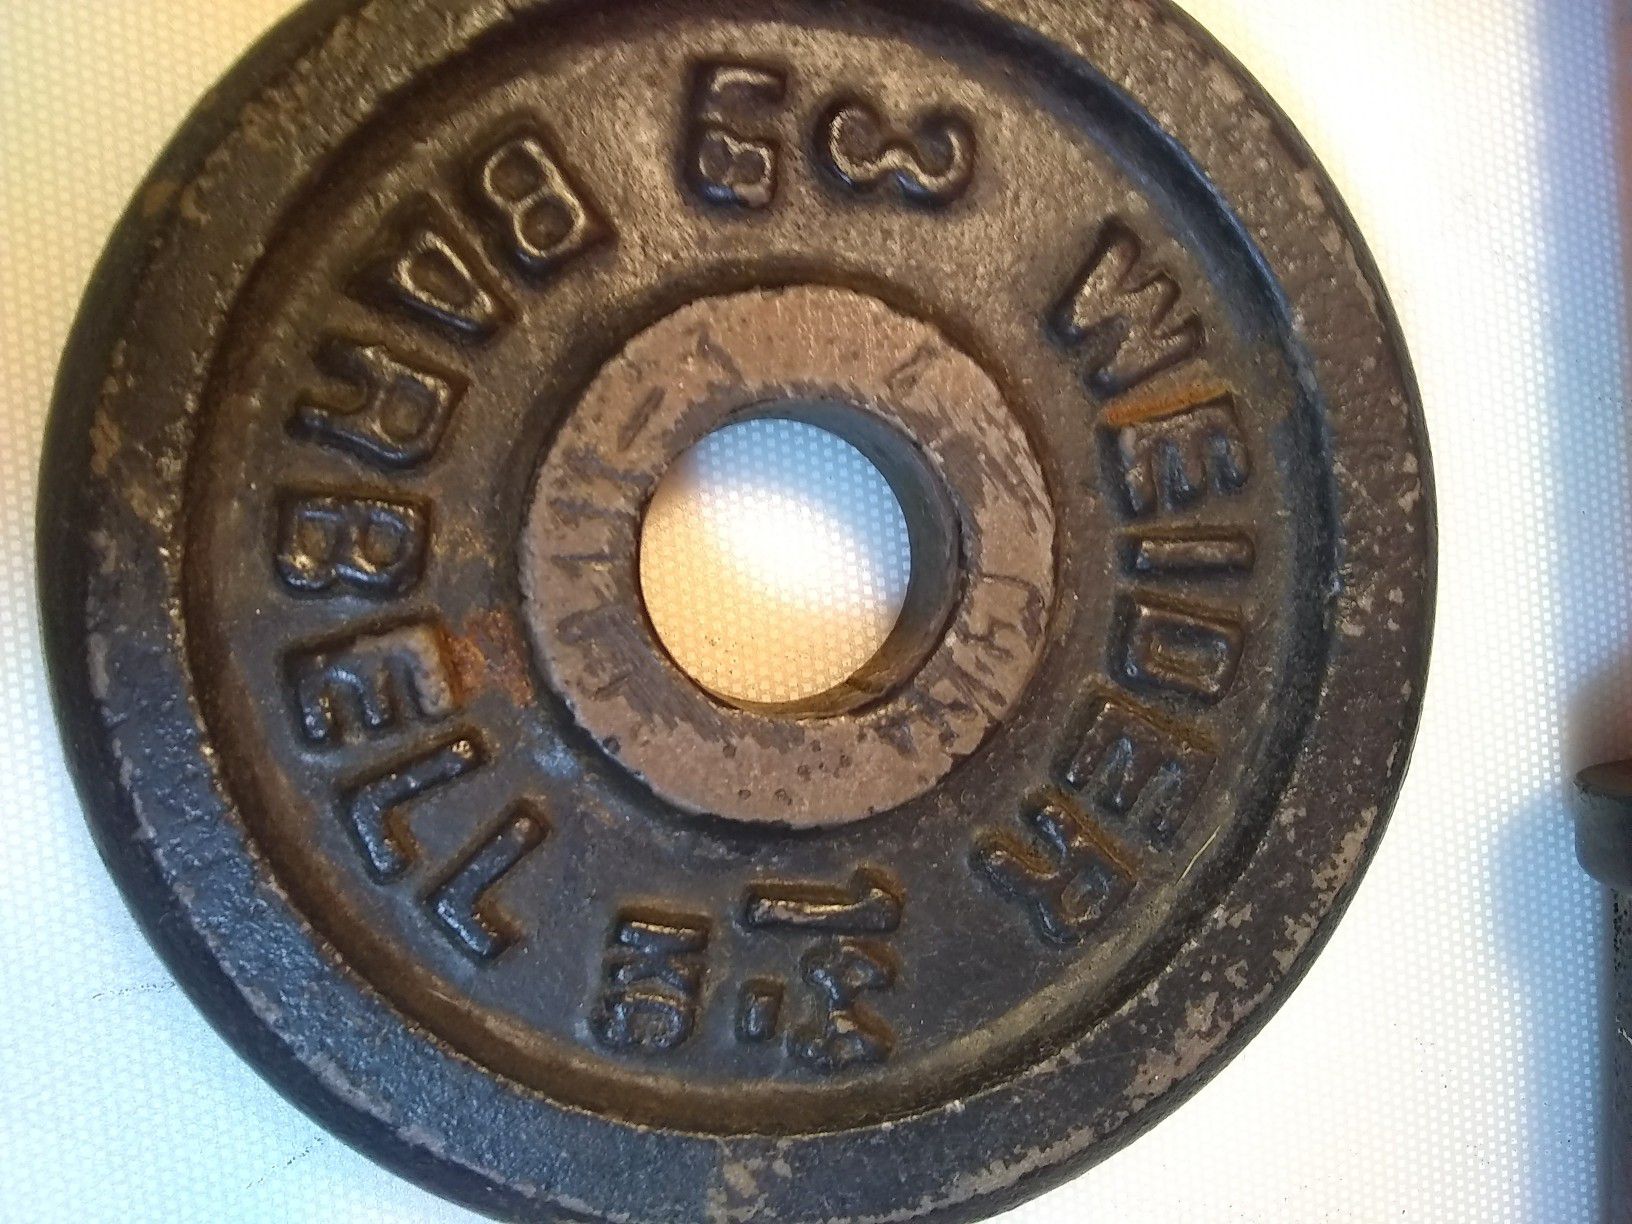 2-3lb. Weider Barbell plates